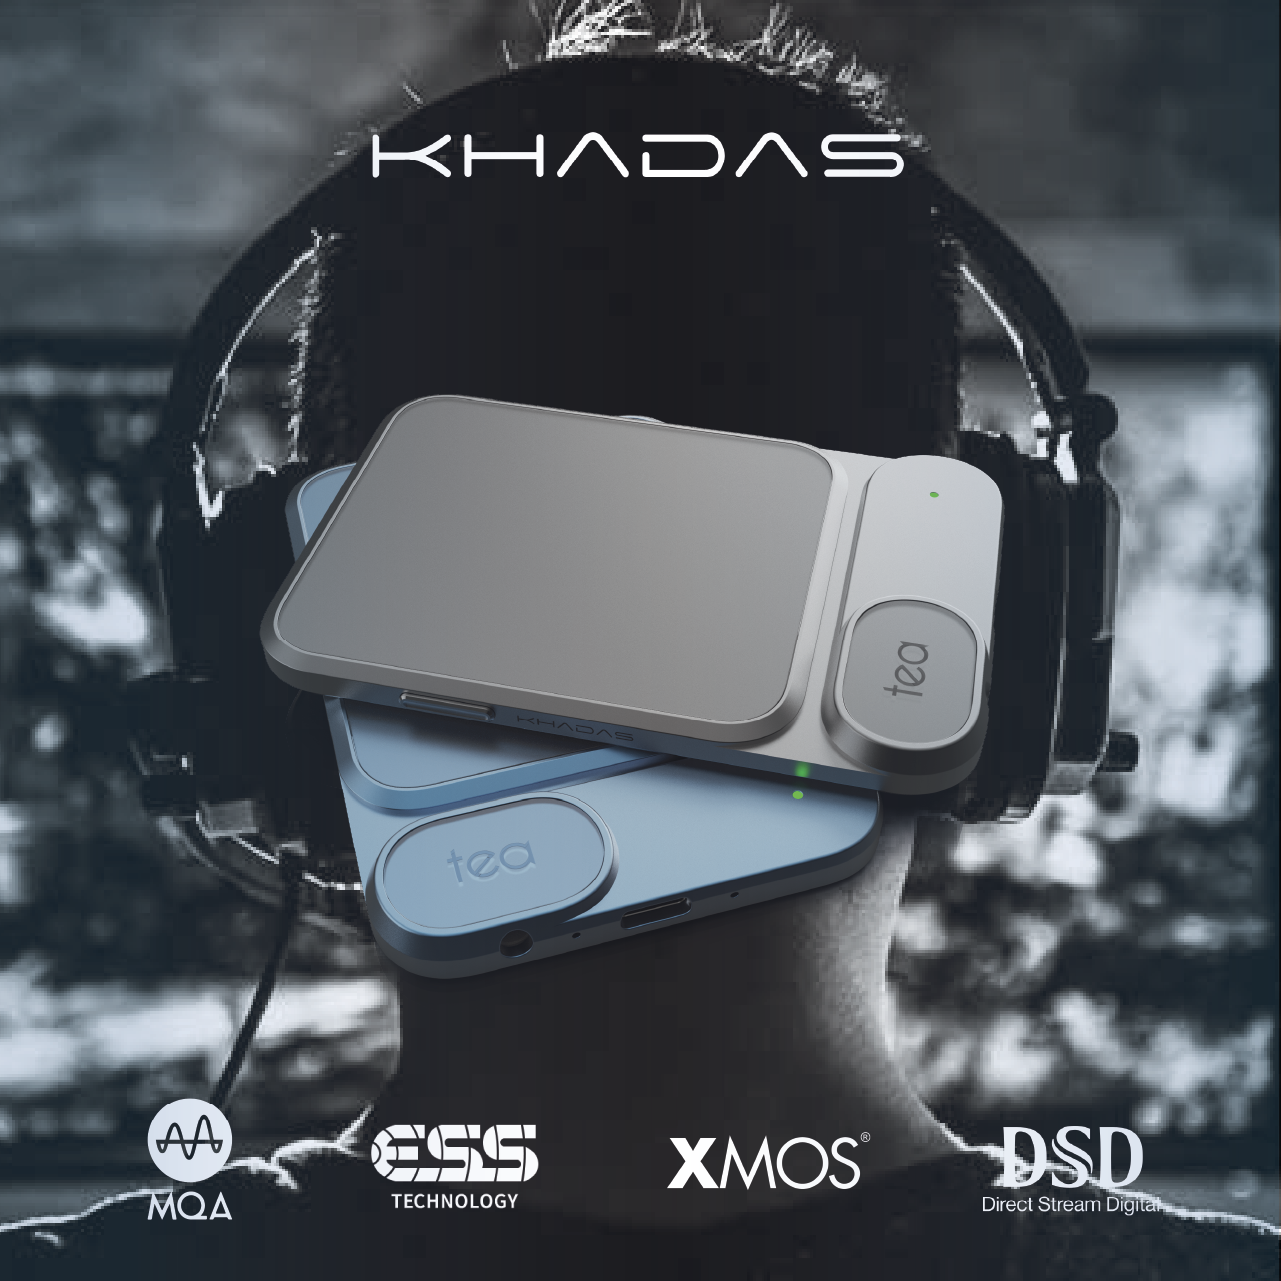 【Amazon――KHADAS Tea 世界初MagSafeに正規対応した超薄型